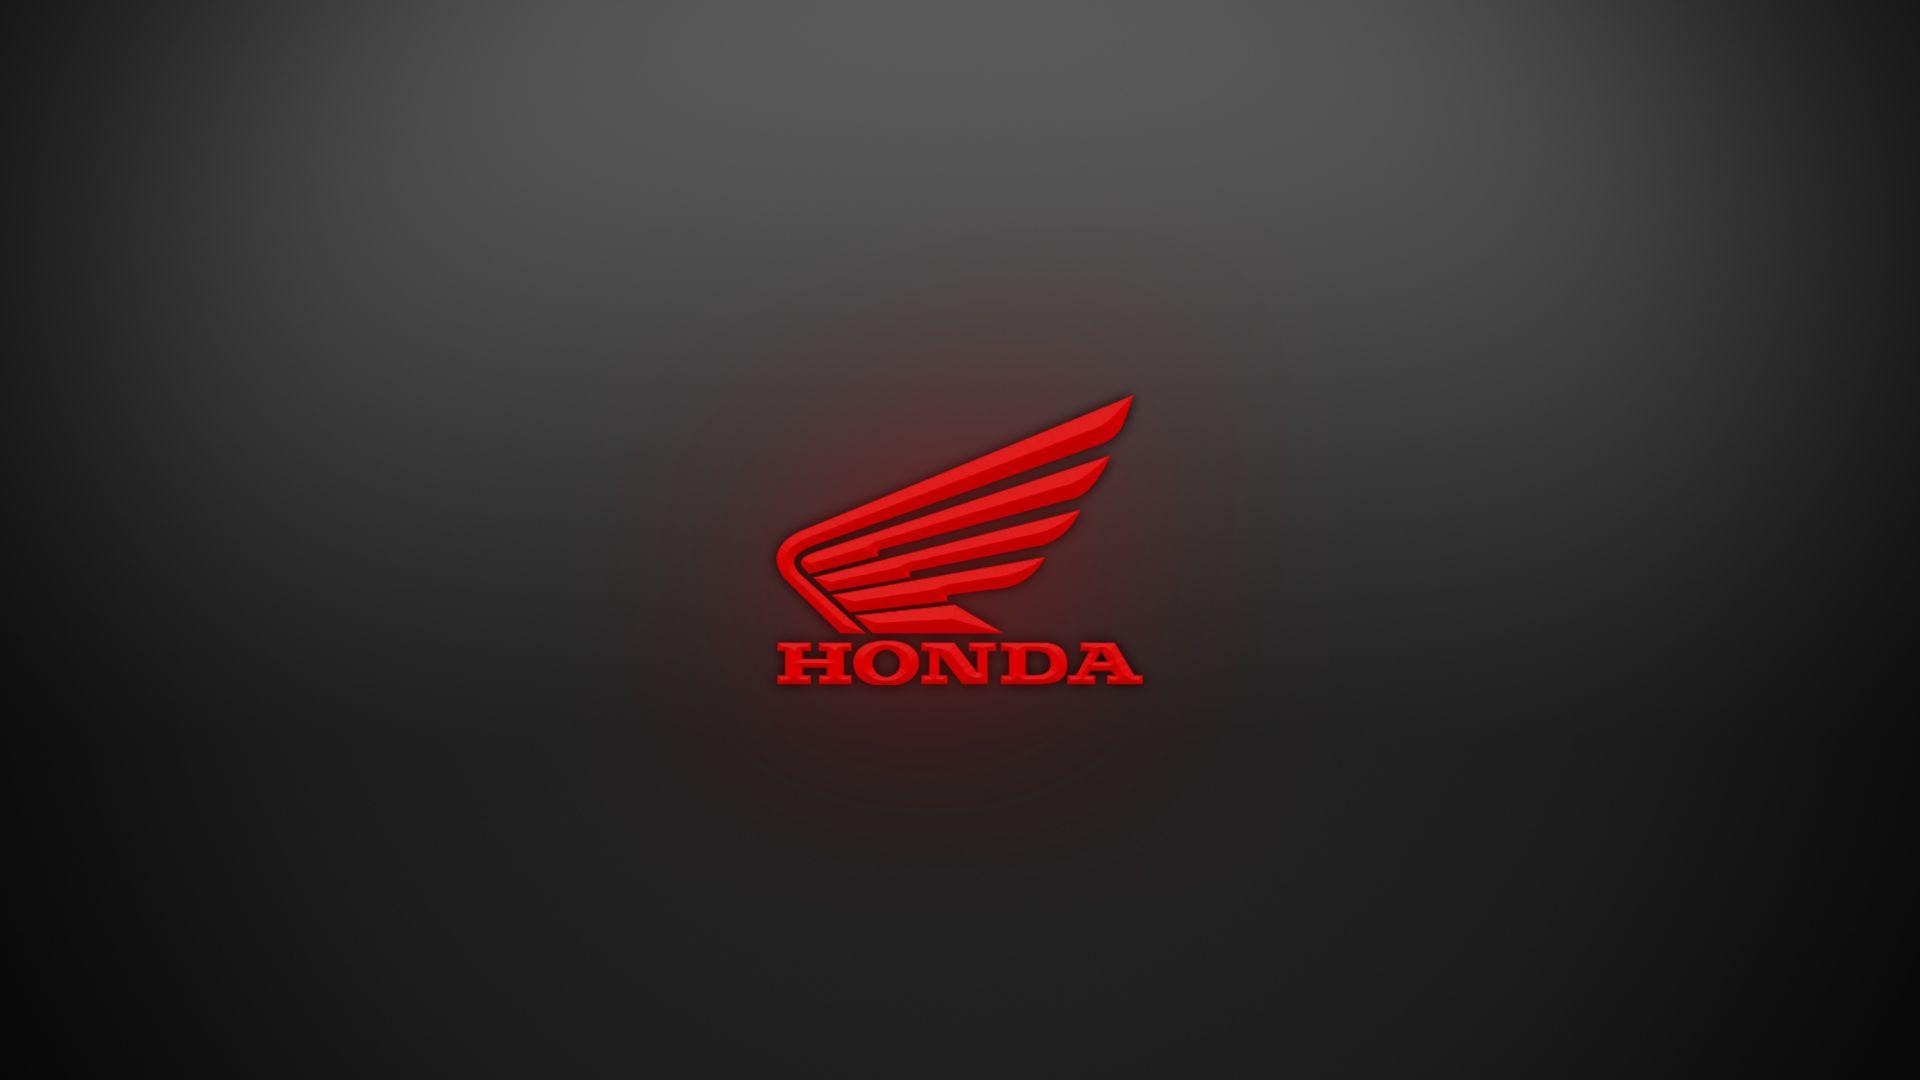 Honda Powersports Logo - Honda Wallpapers HD | Page 2 of 3 | wallpaper.wiki